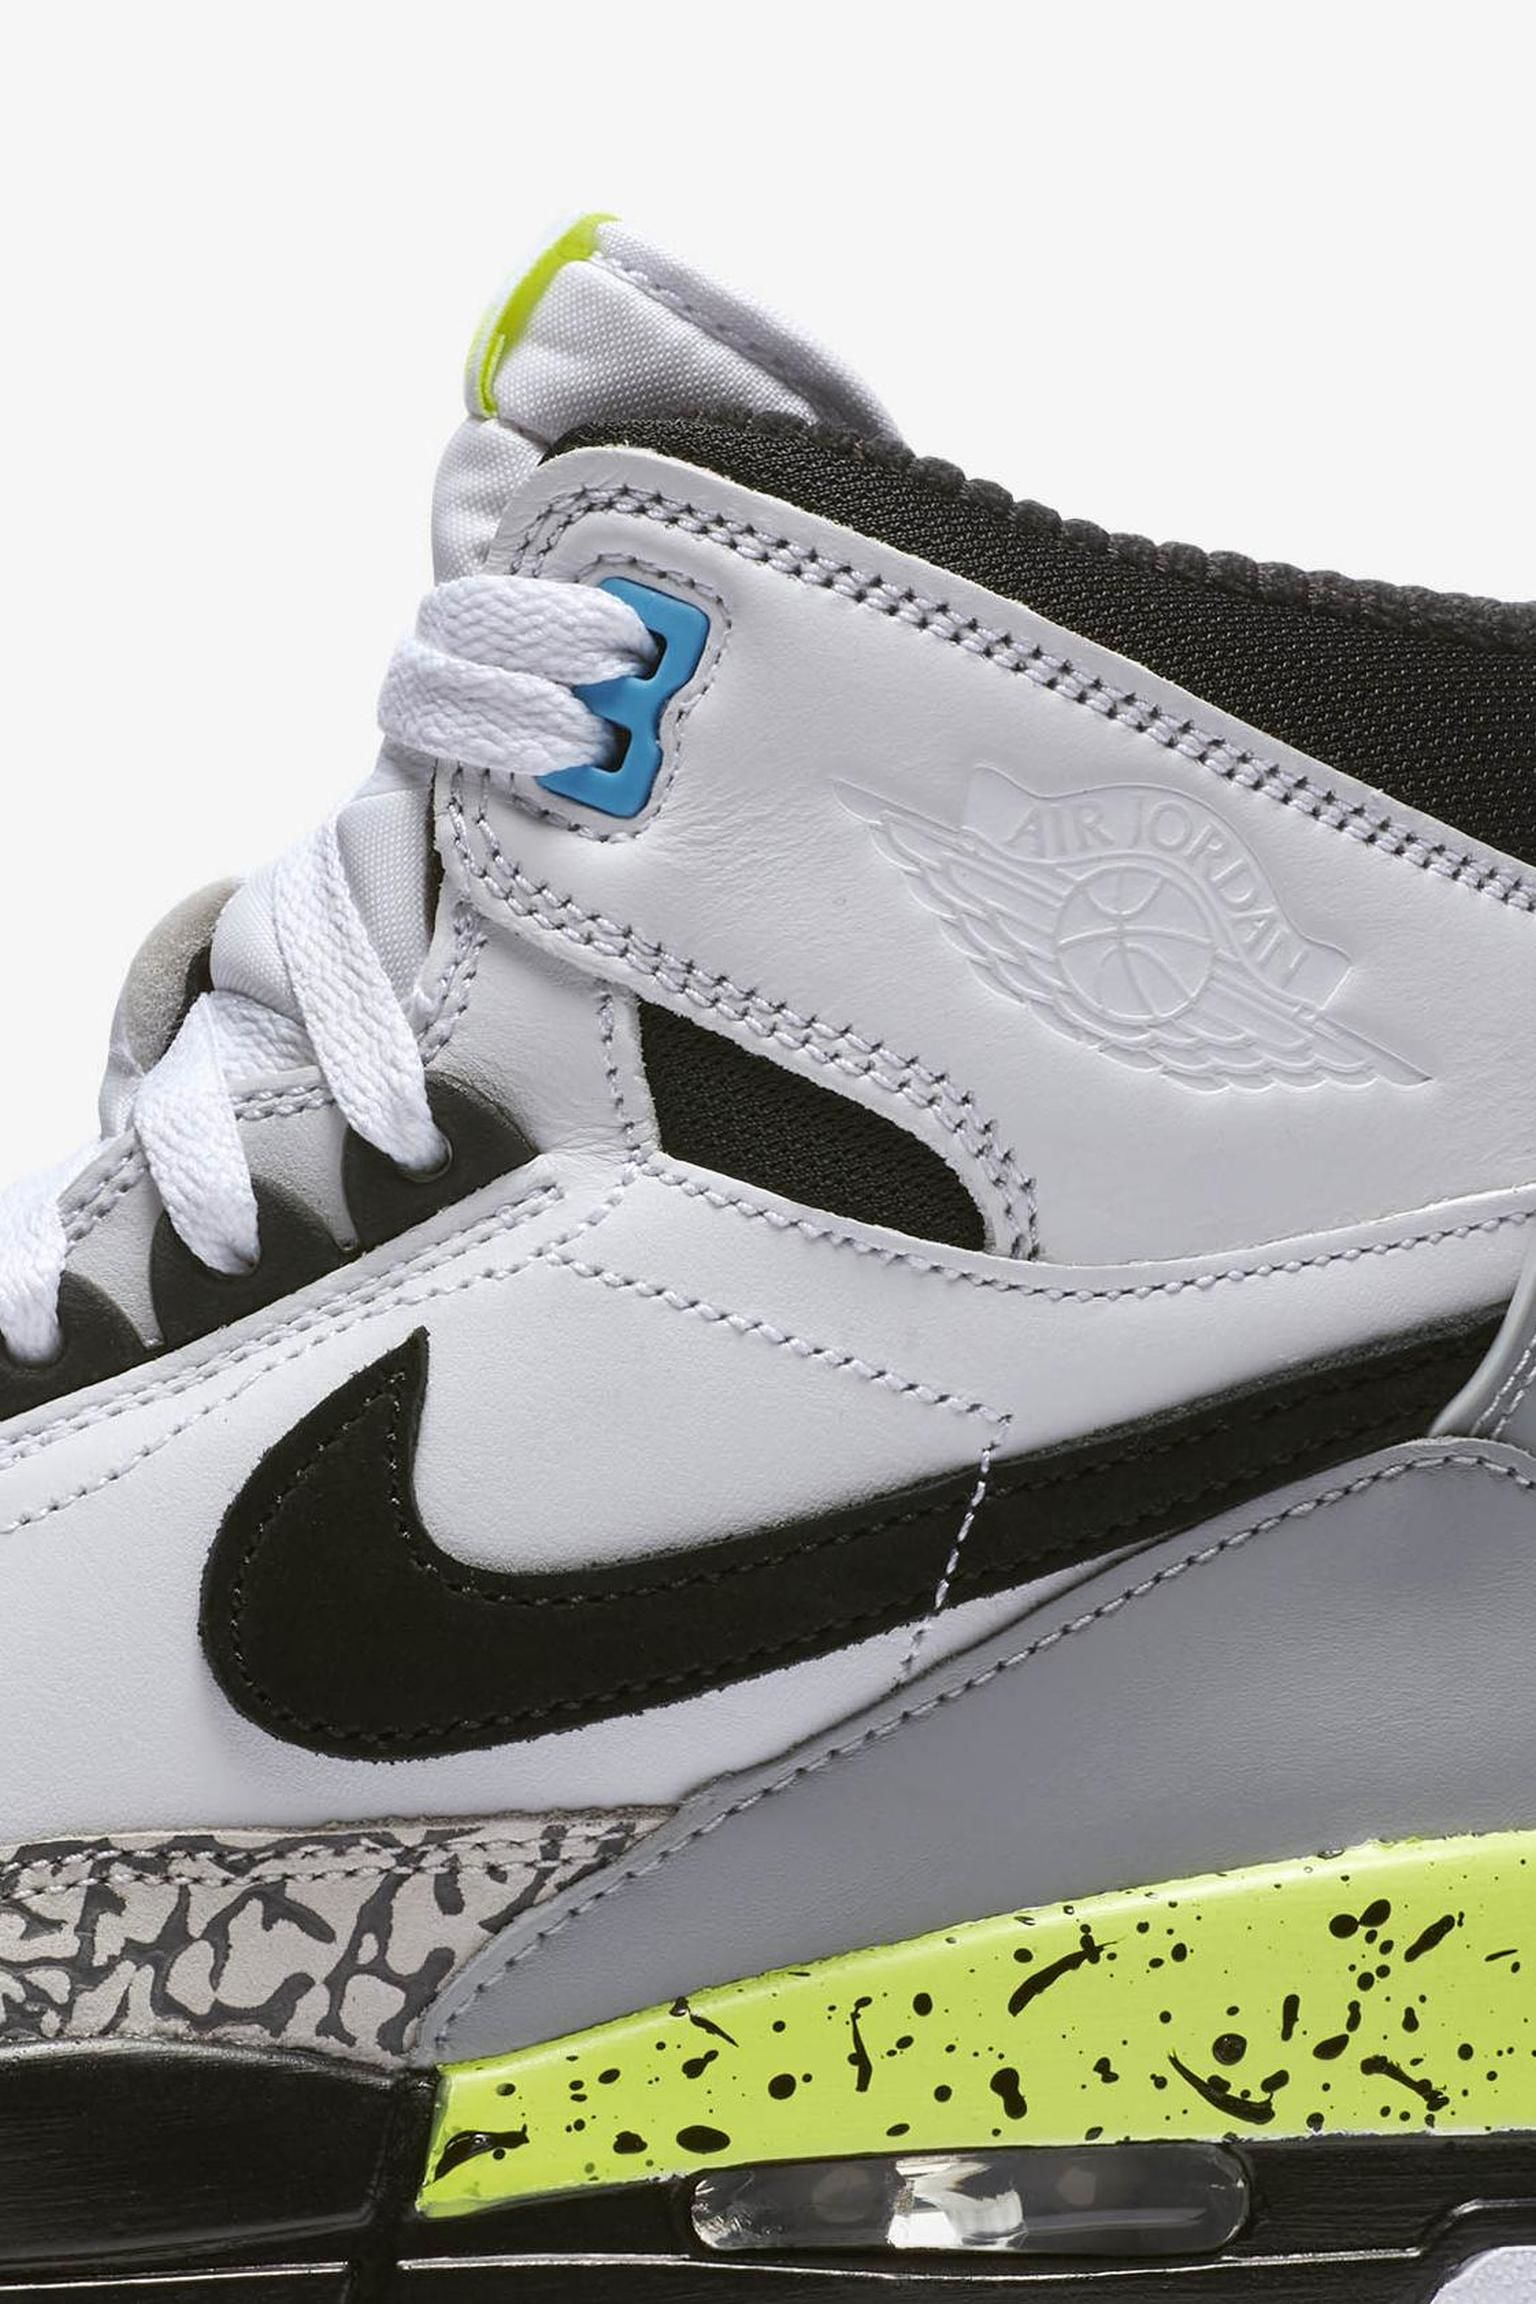 Air Jordan Legacy 312 White Black Volt Release Date Nike Snkrs